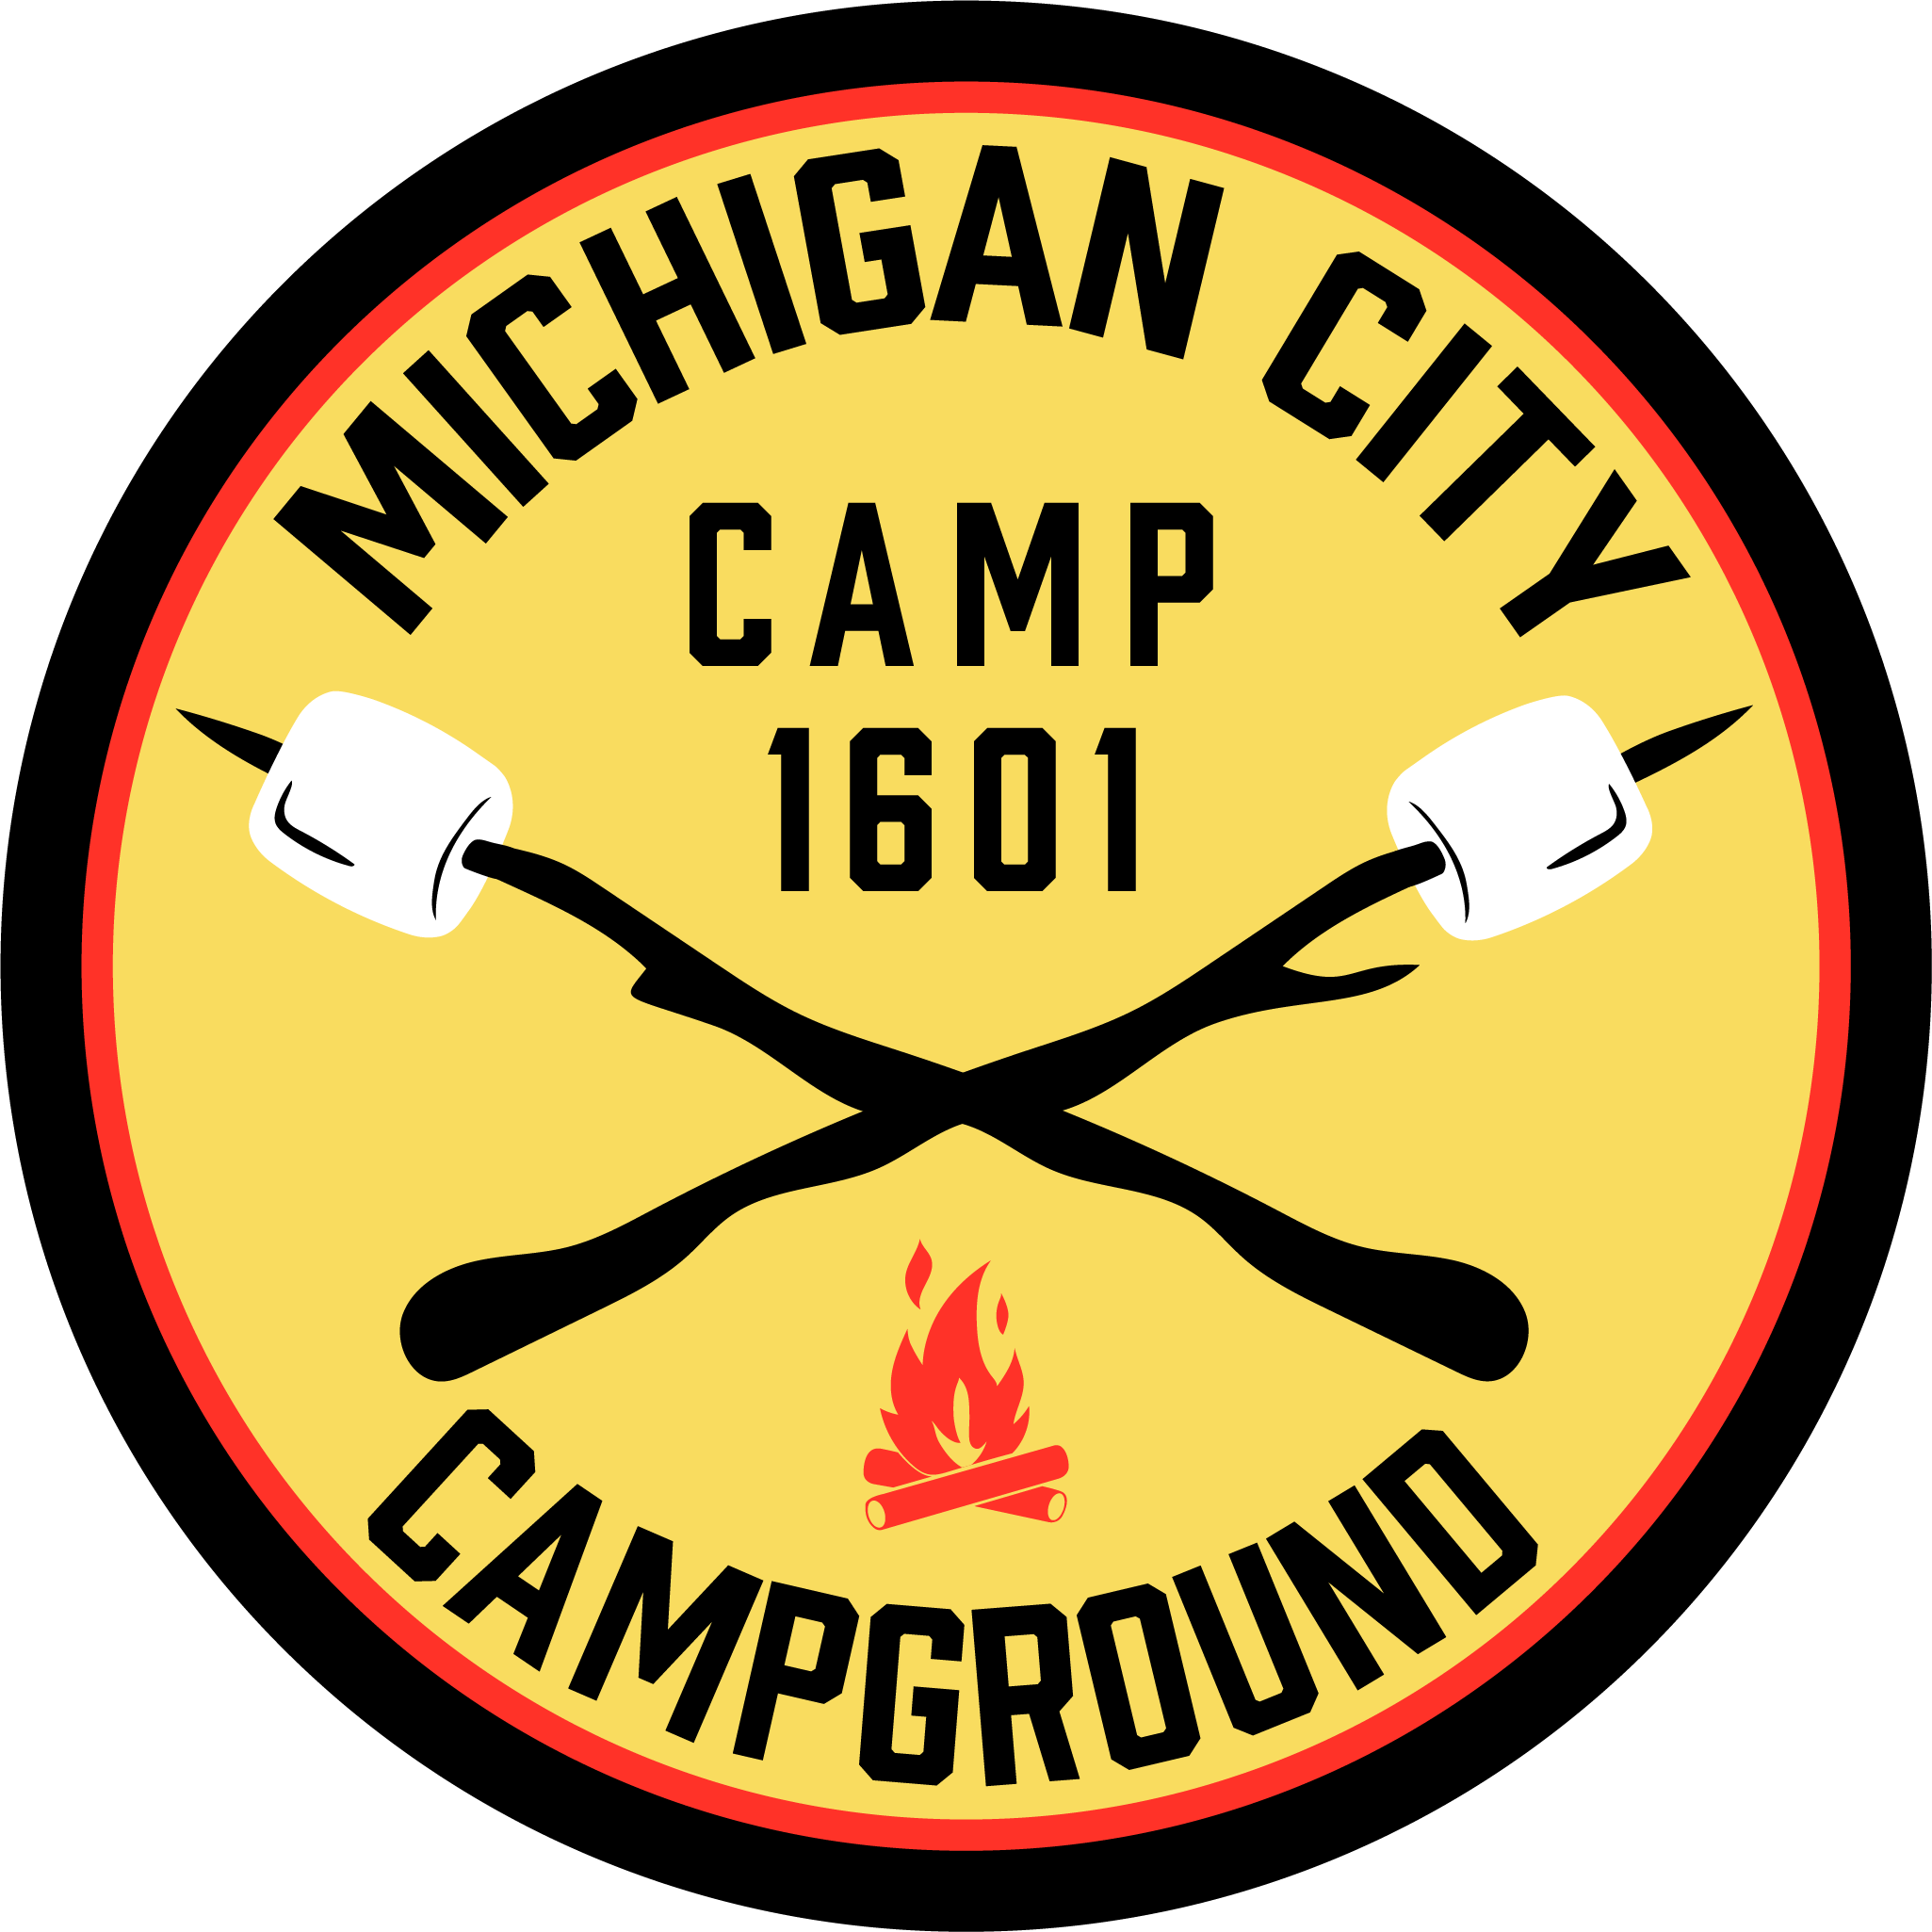 Michigan City Campground - logo